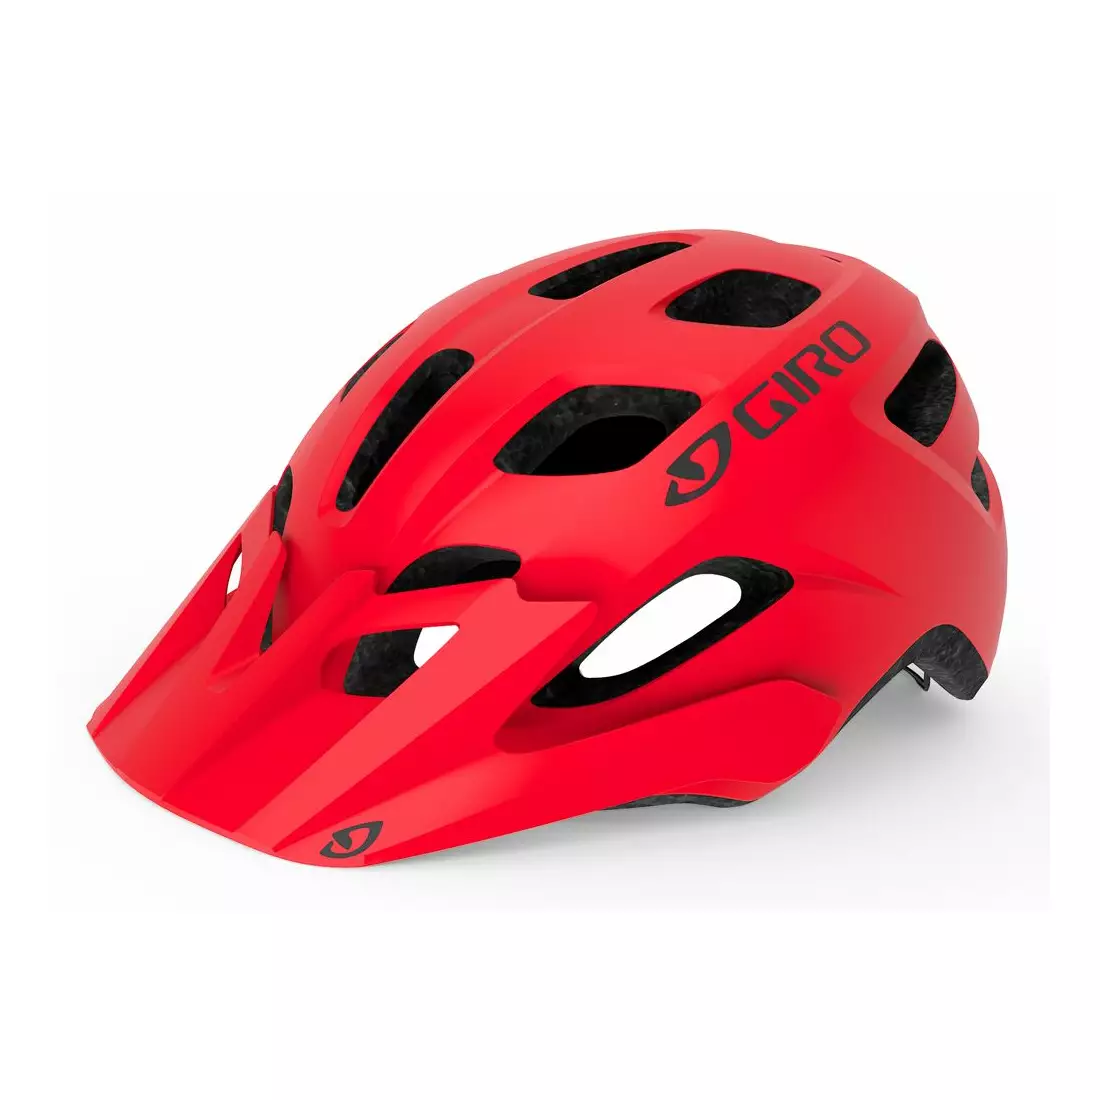 Bicycle helmet GIRO TREMOR matte bright red 